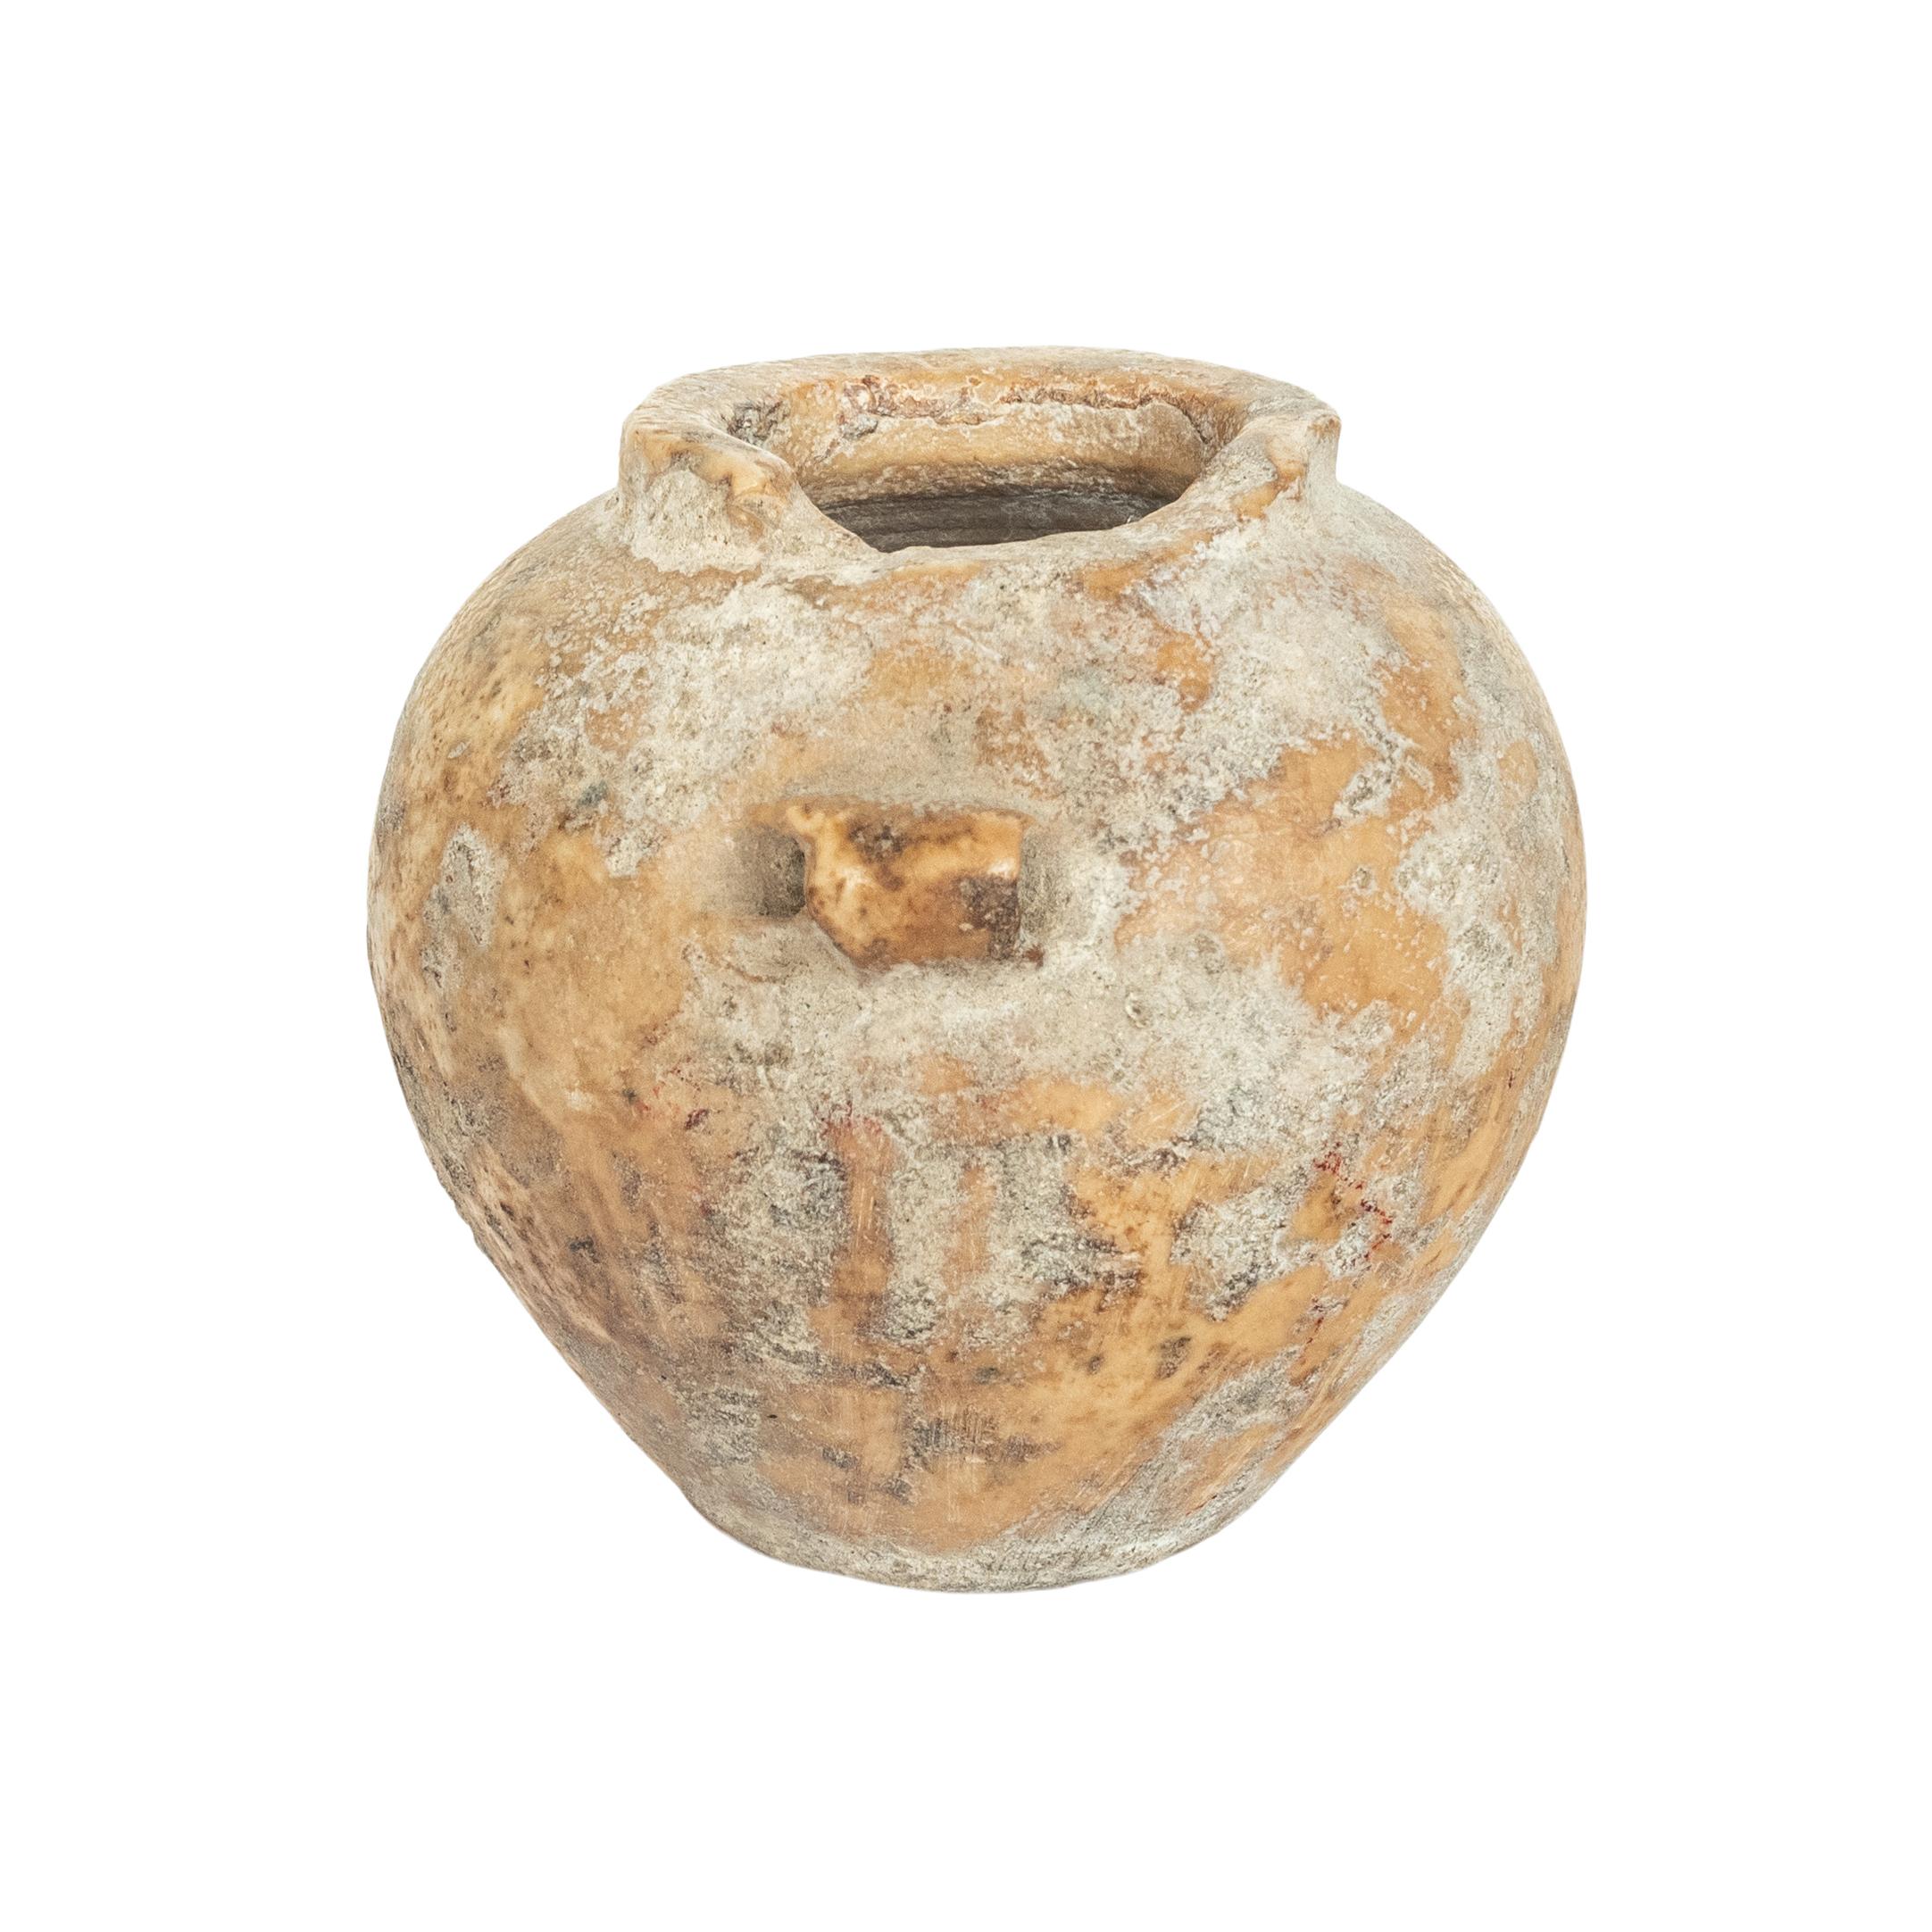 Ancient Egyptian Old Kingdom Miniature Lime Stone Vessel Jar 2600-2800 BCE For Sale 9